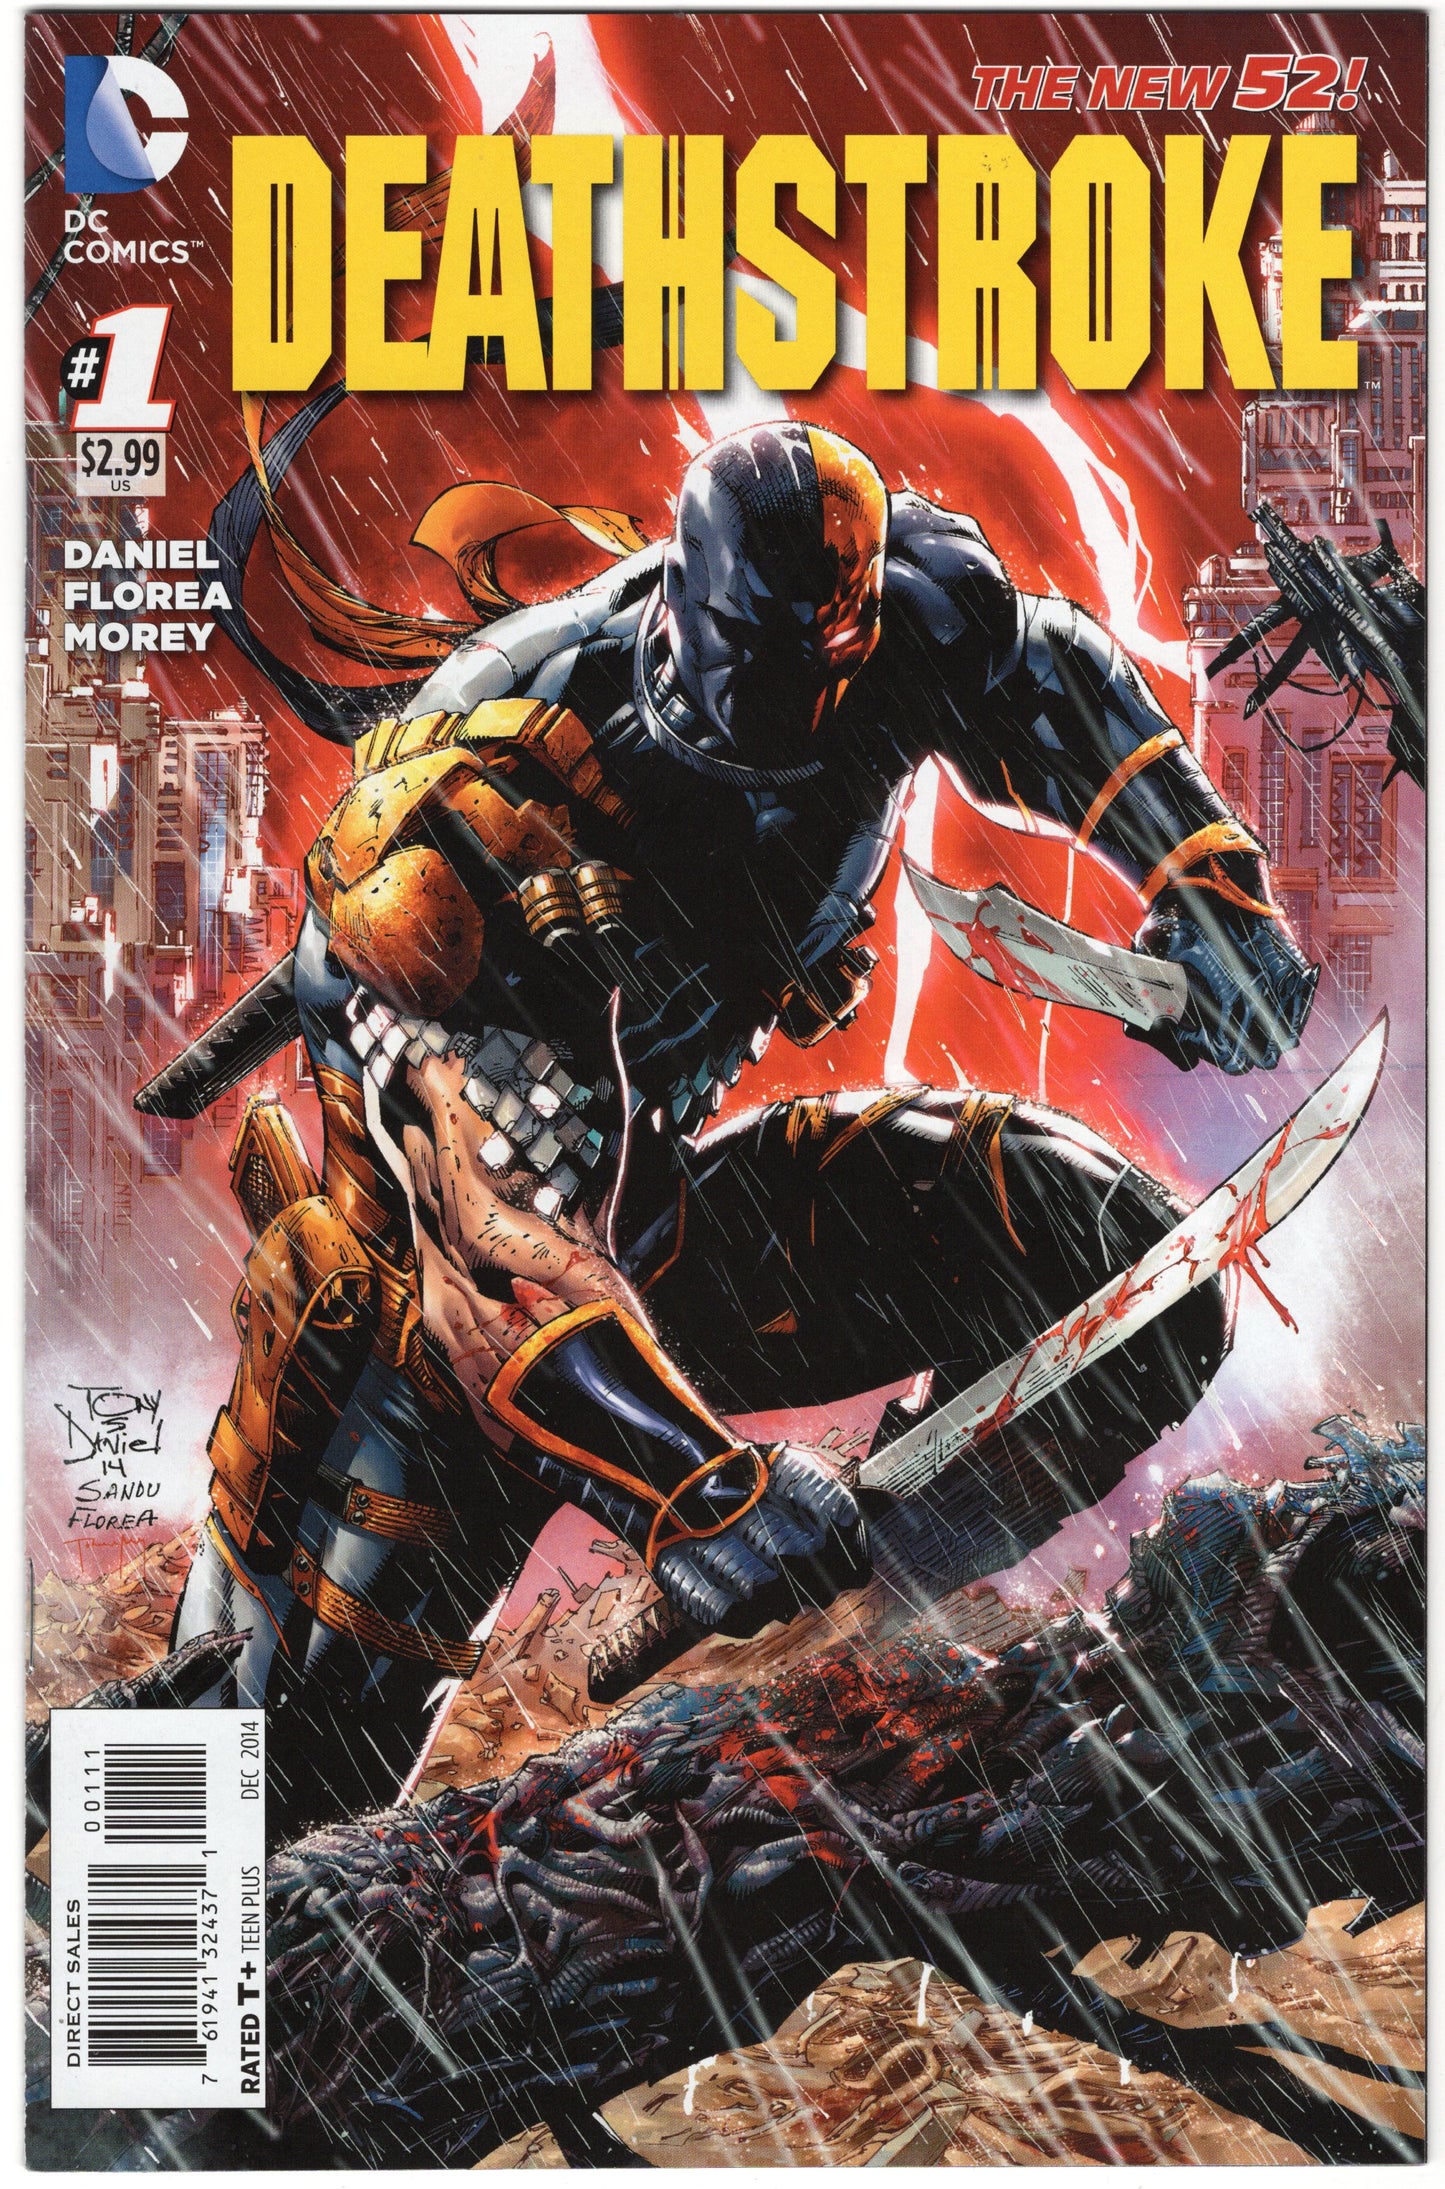 Deathstroke - Issue #1 "God of War" (Dec. 2014 - DC Comics) NM-